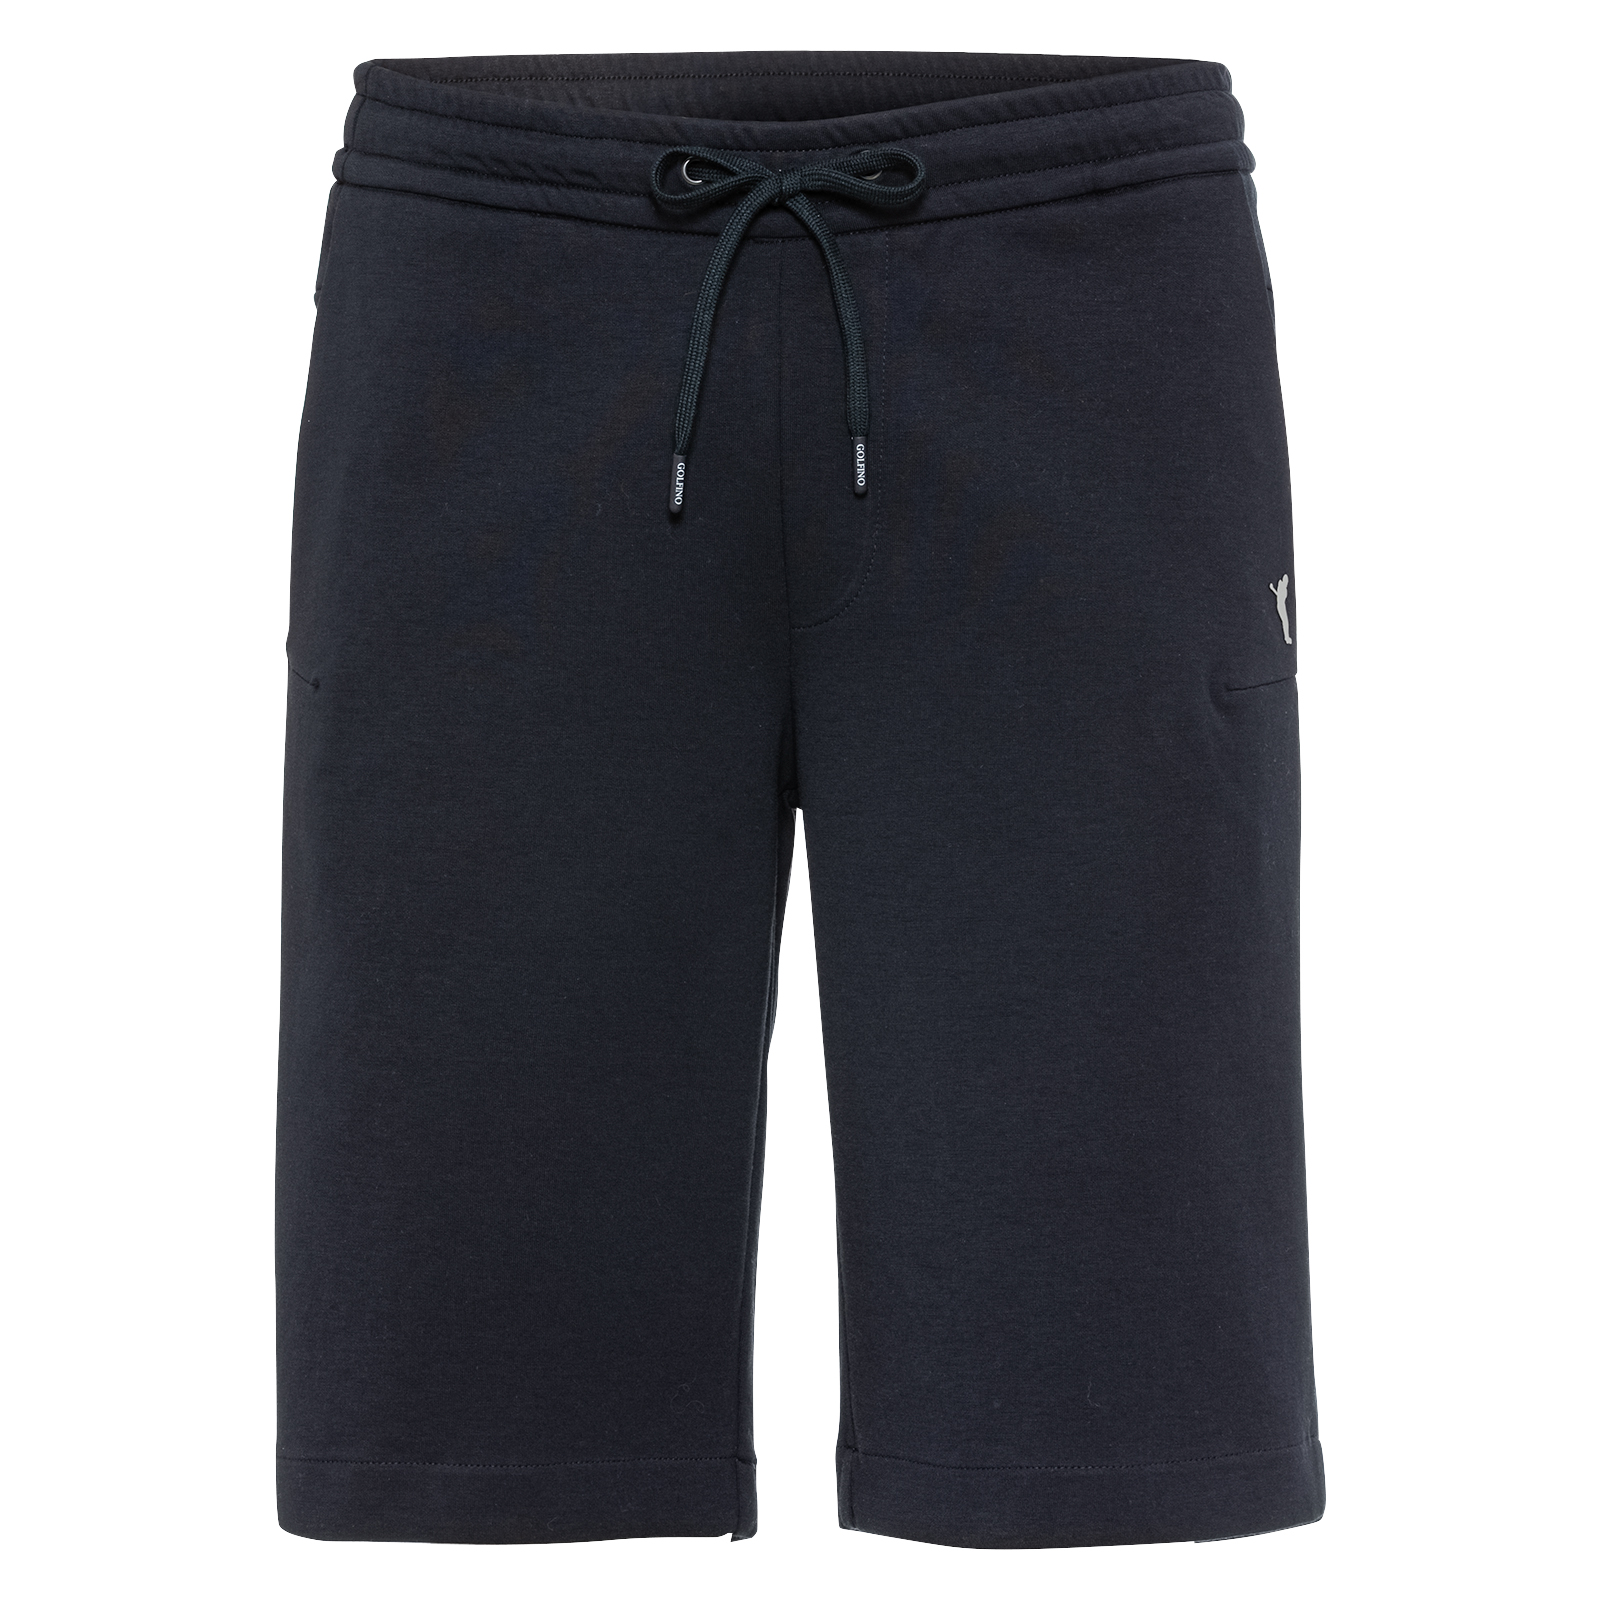 Men's comfortable Bermuda-style shorts with drawstring 